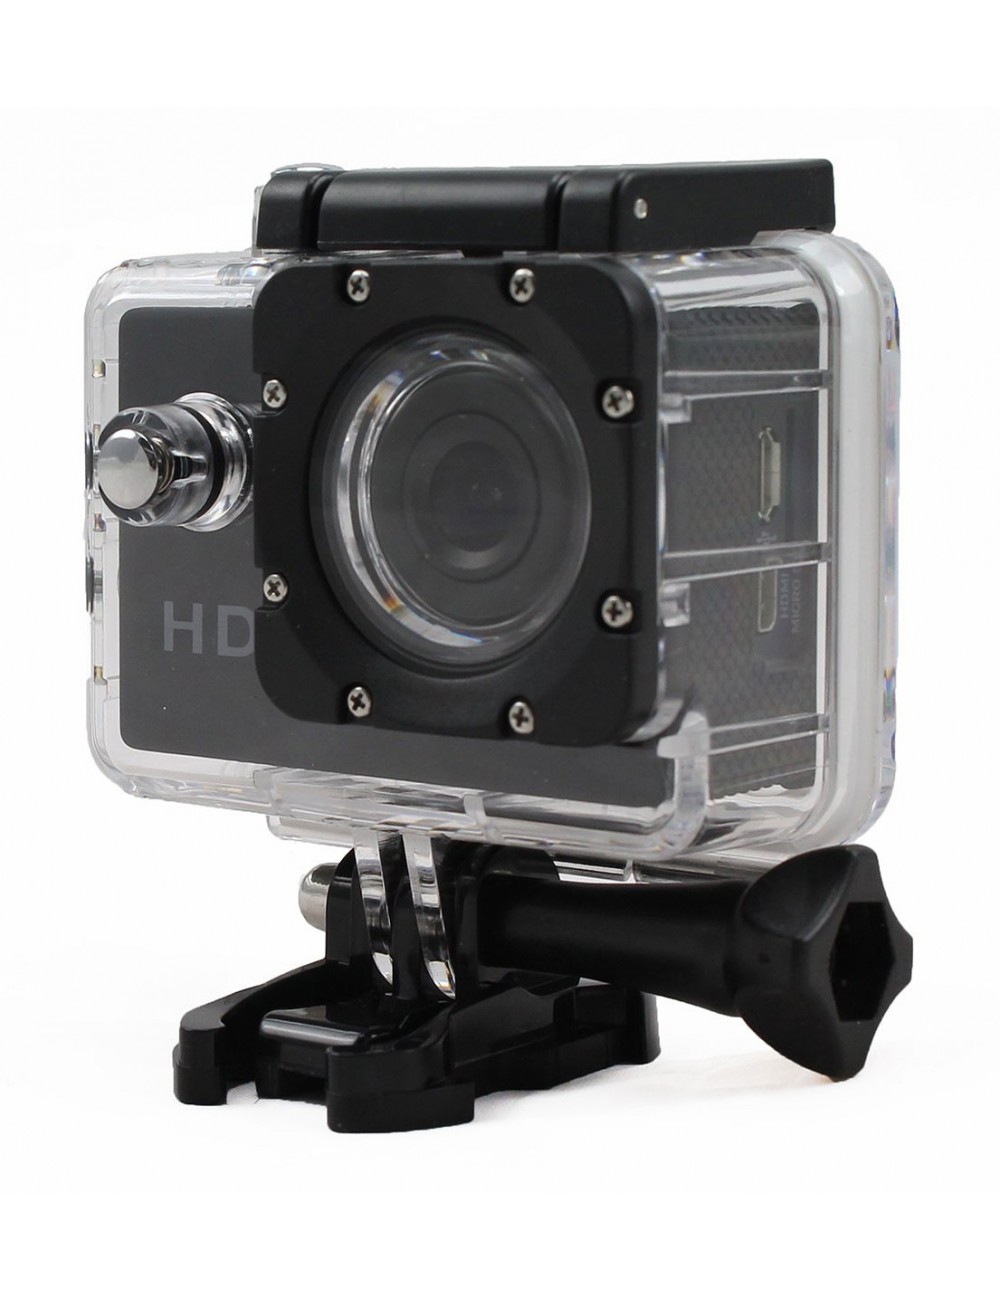 Sport camera HD 720p - 1 Megapixel - Black - Waterproof